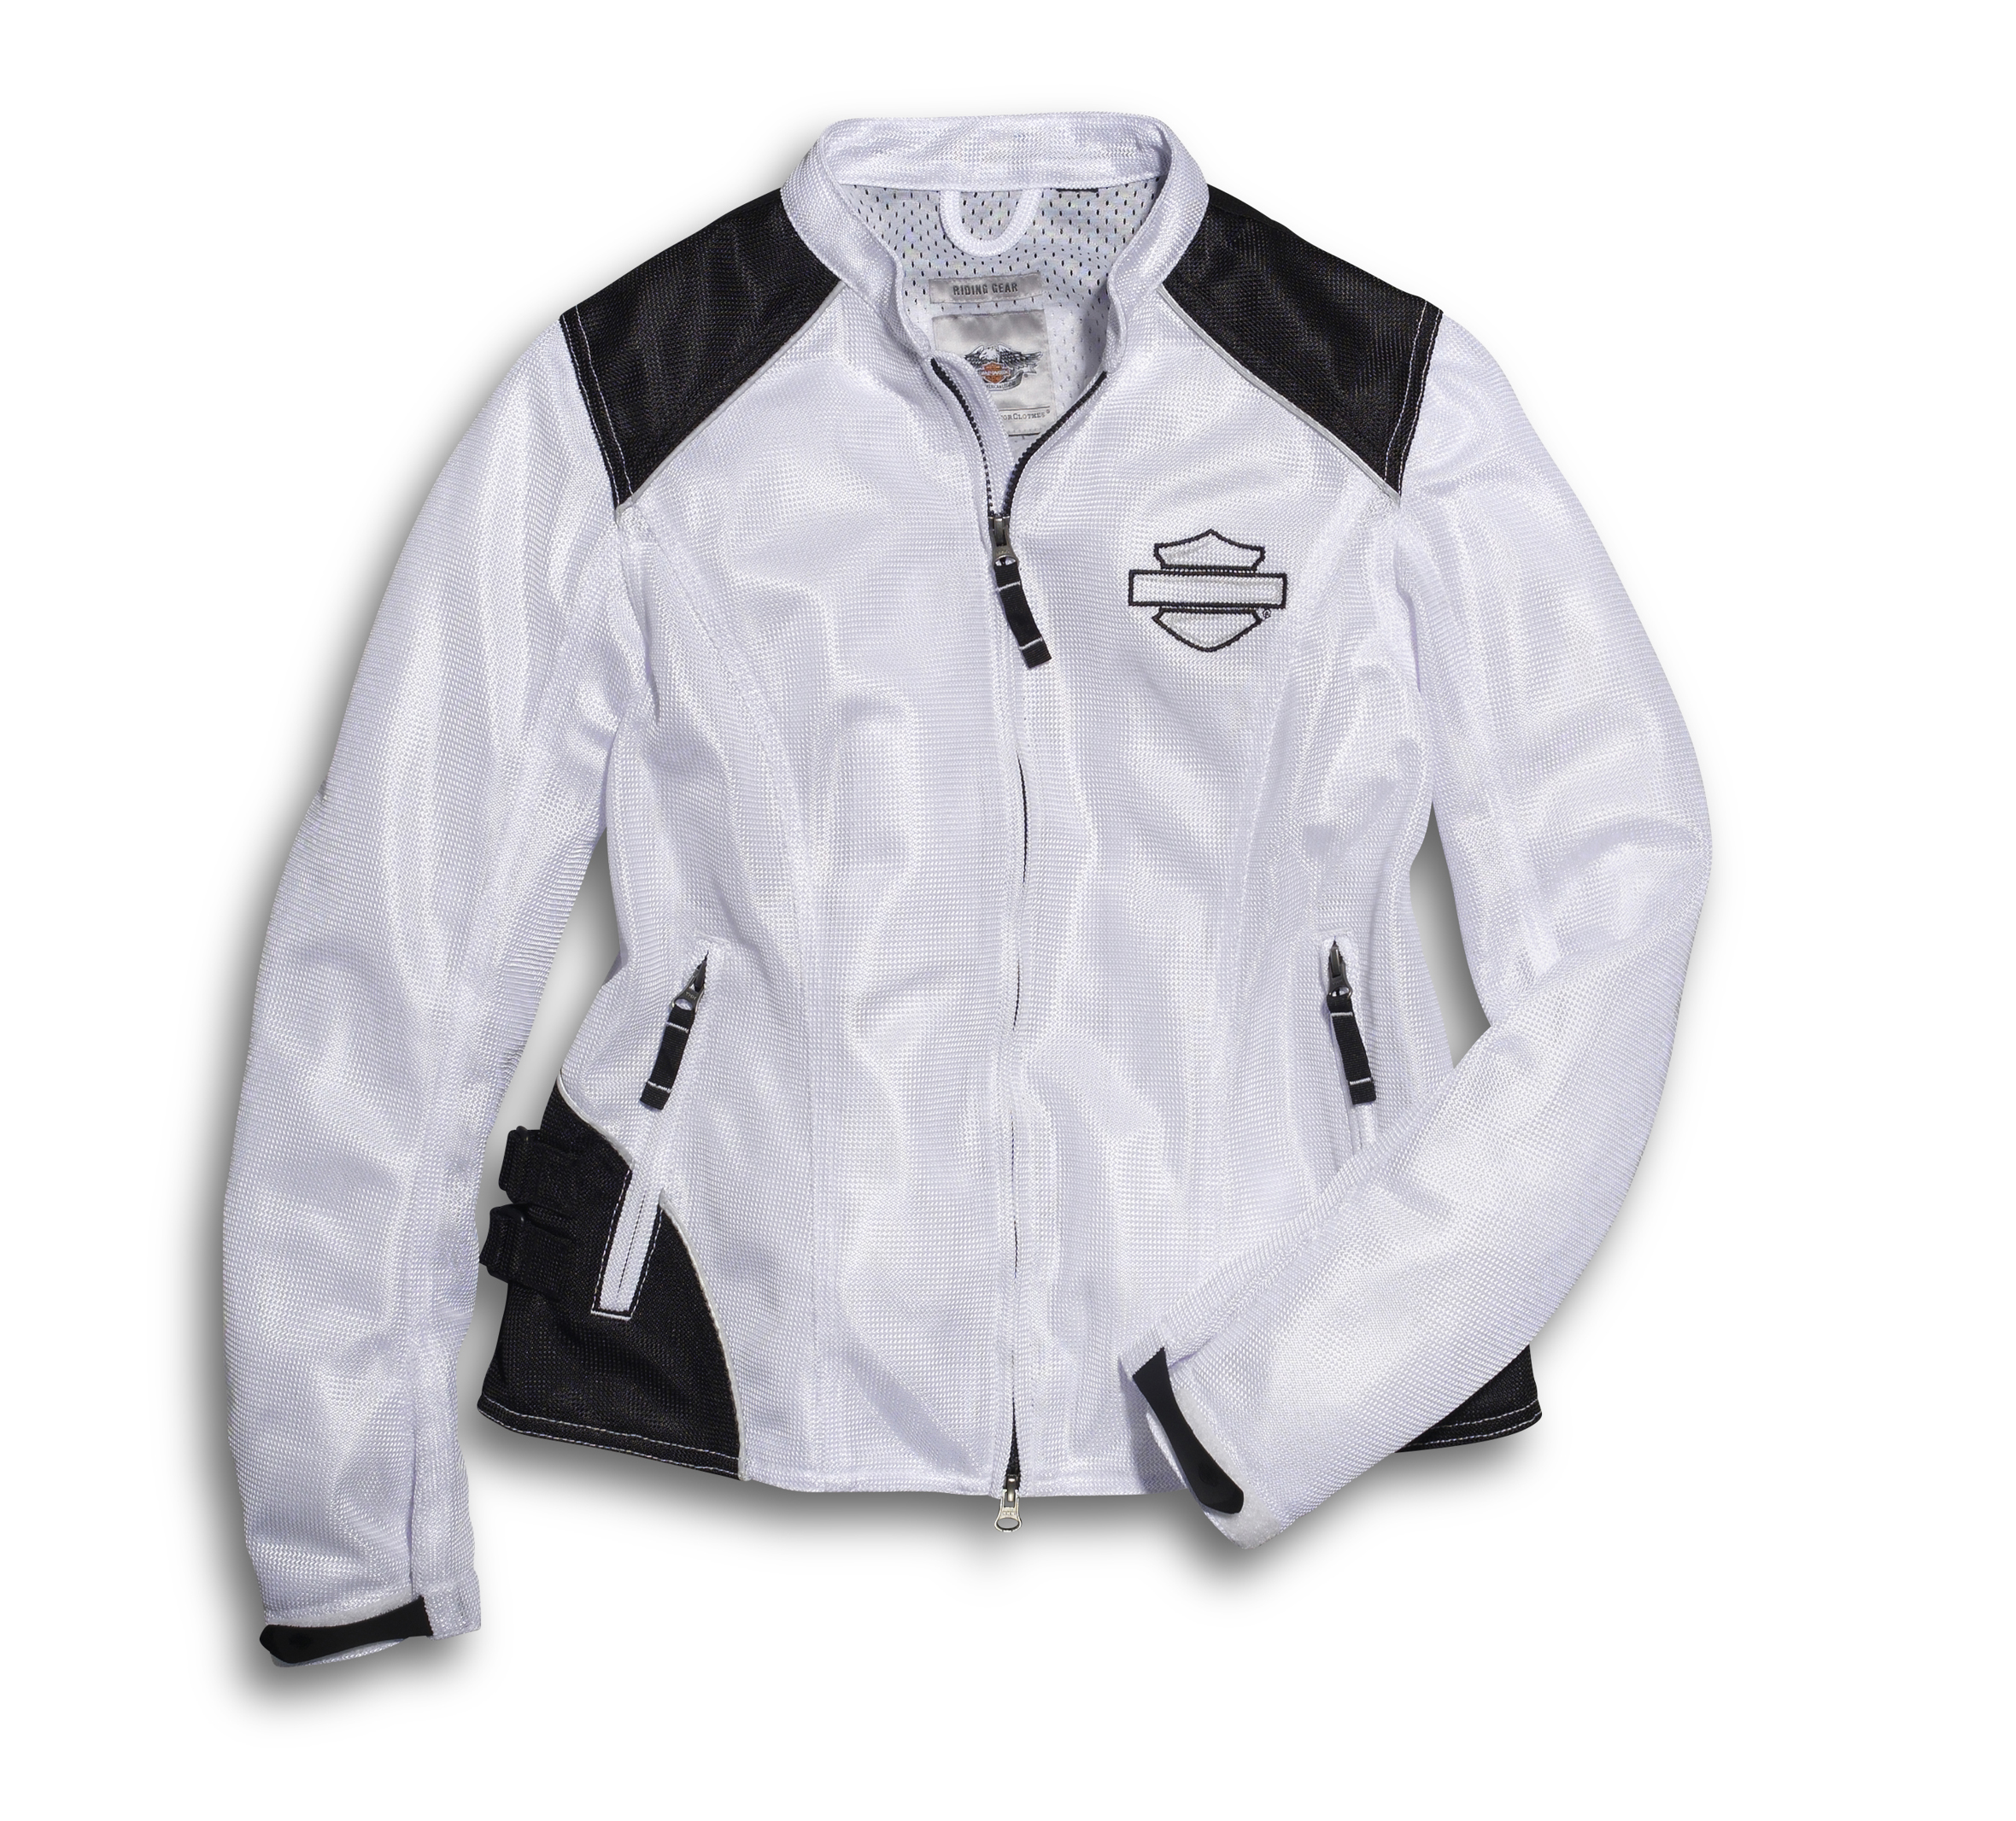 Womens White Harley Davidson Jacket Promotion Off57